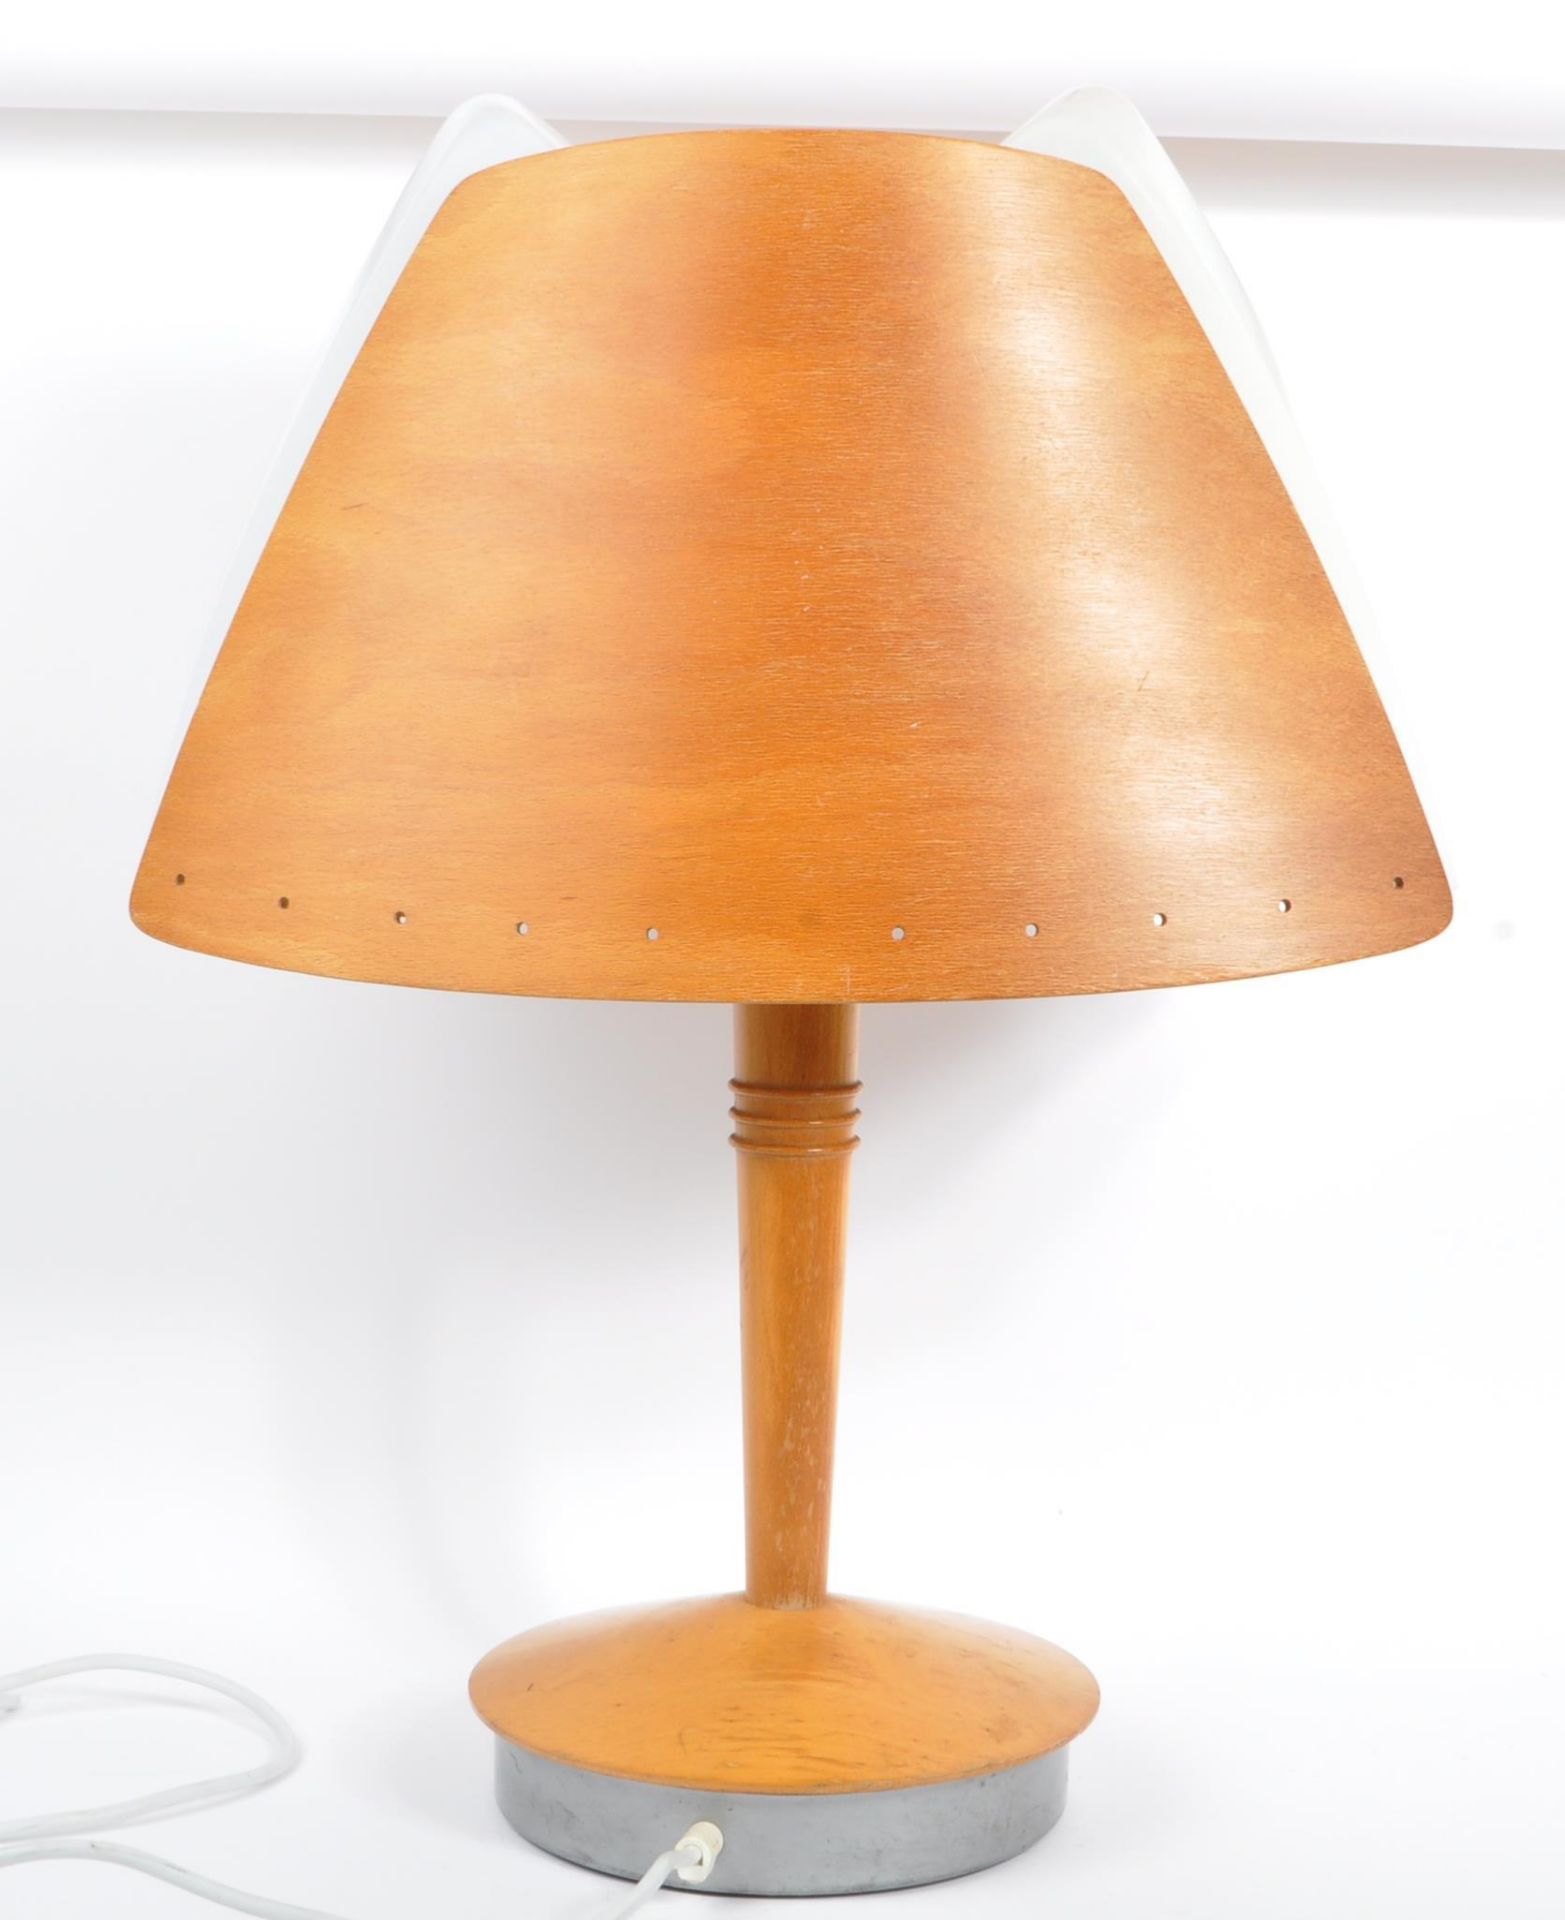 RETRO 20TH CENTURY TABLE LAMP BY SOREN ERIKSEN FOR LUCID - Image 3 of 6